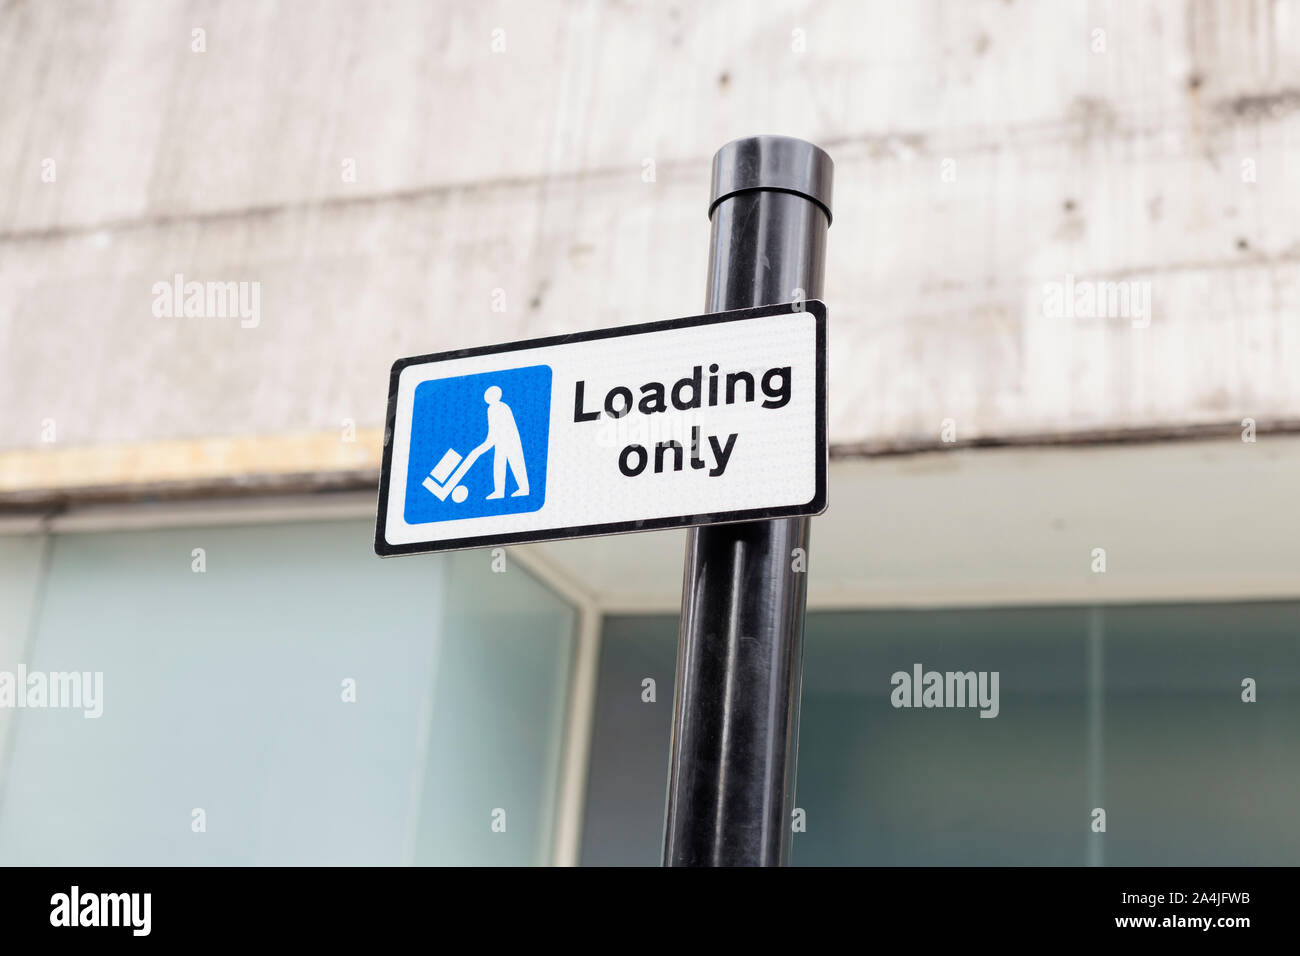 Loading bay sign, London, England Stock Photo